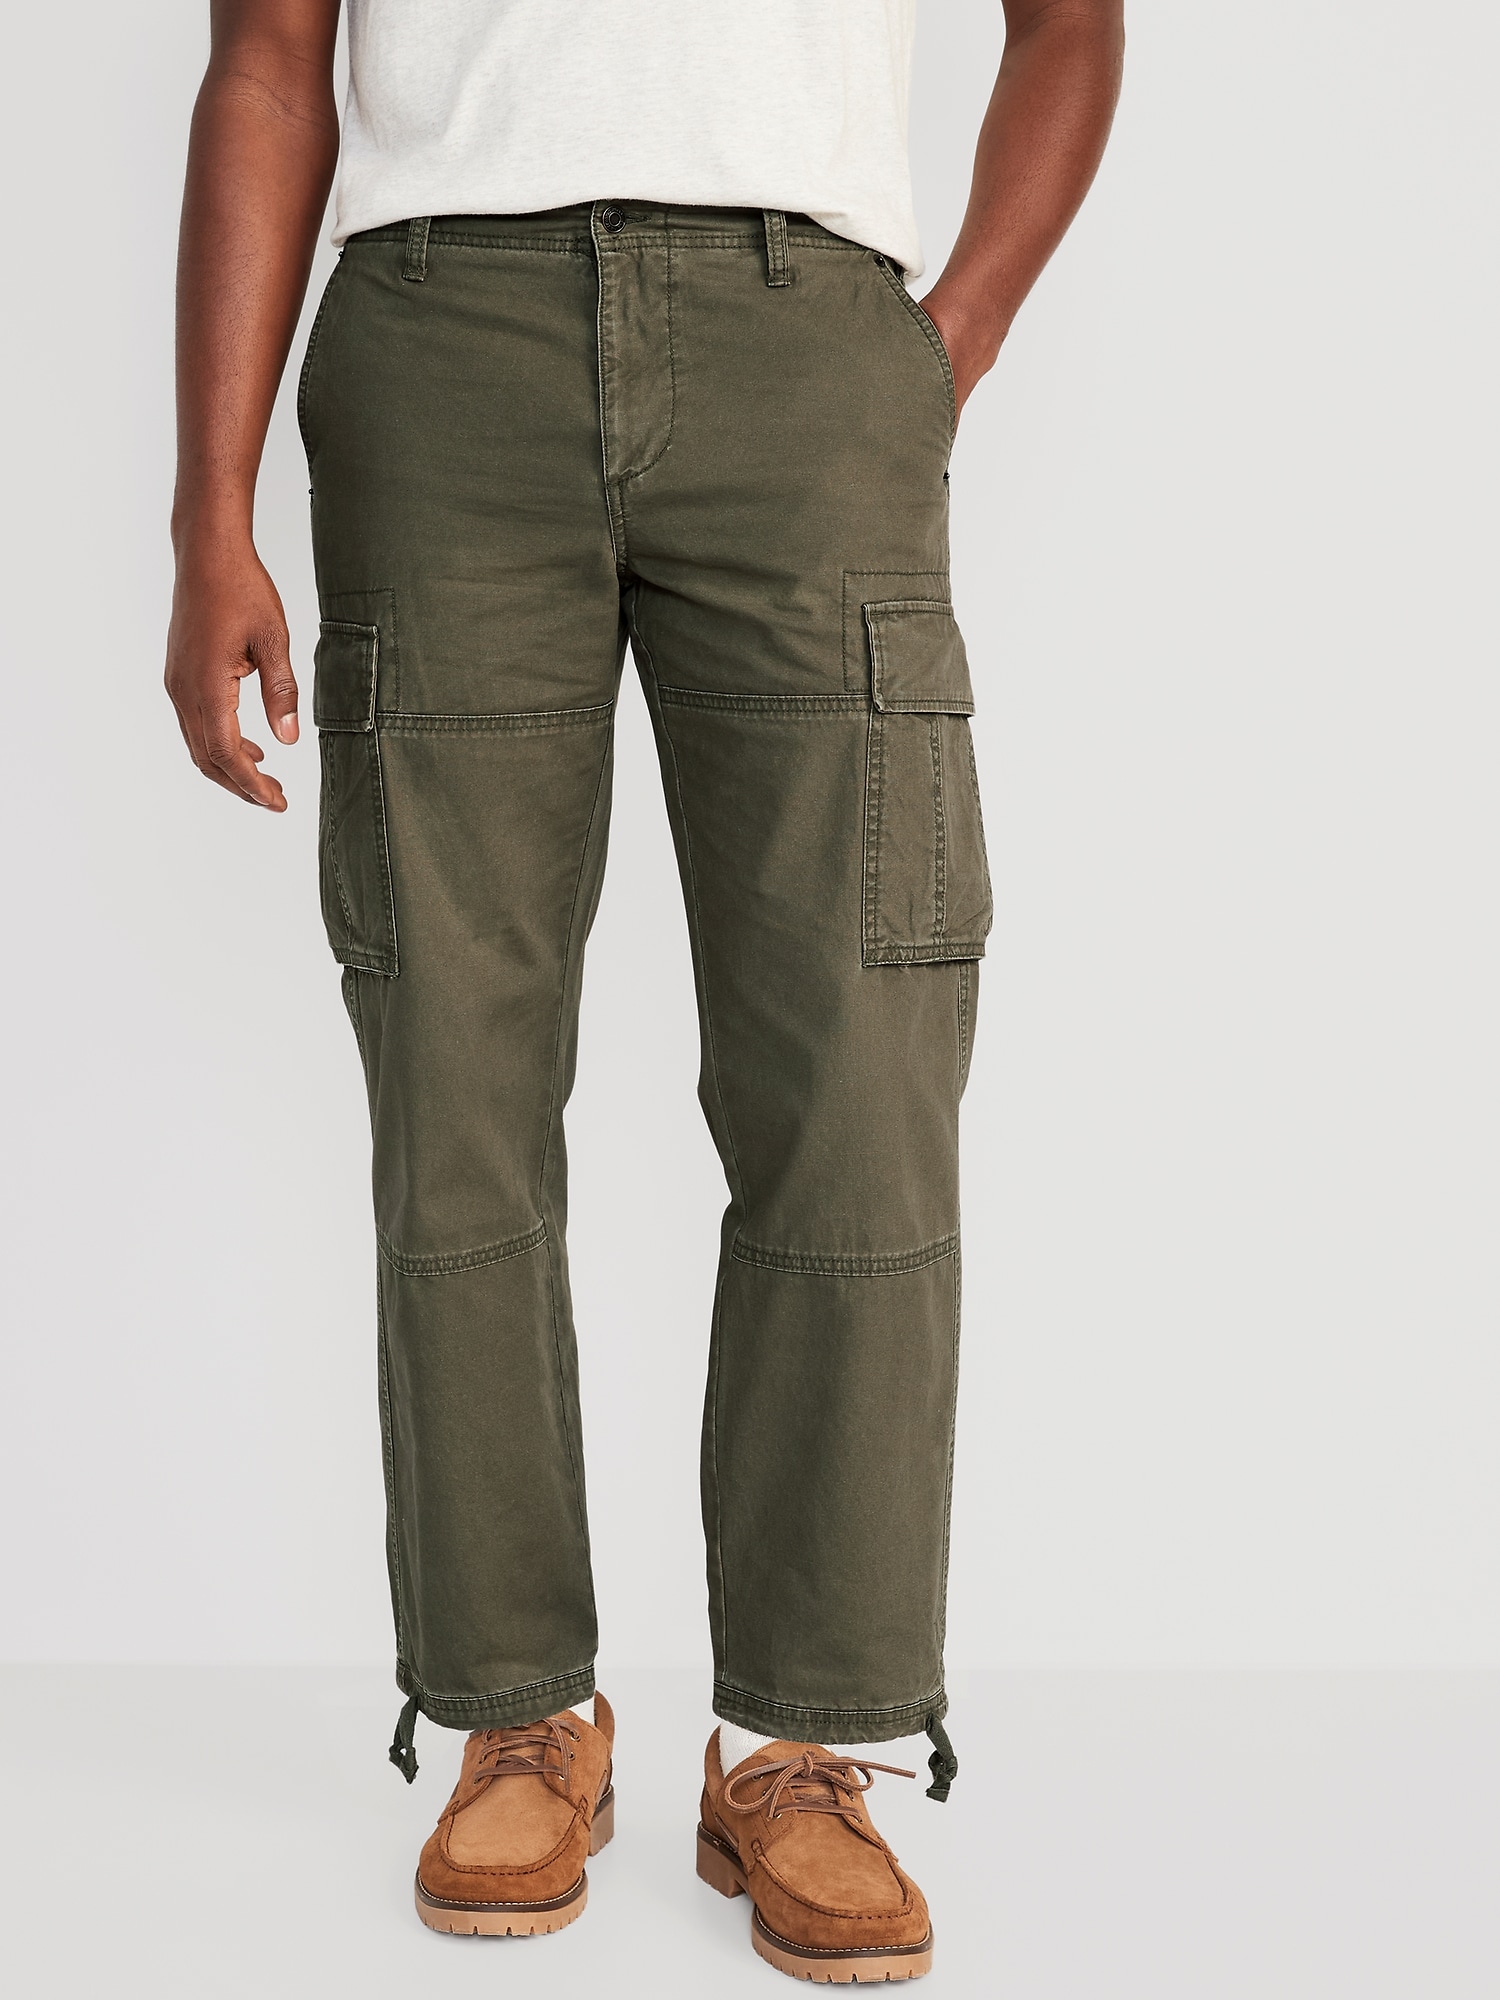 Buy FNOCKS Girls Premium Cotton Contrast Cargo Wide Leg 4 Pocket Cargos/ Trousers Beige at Amazon.in